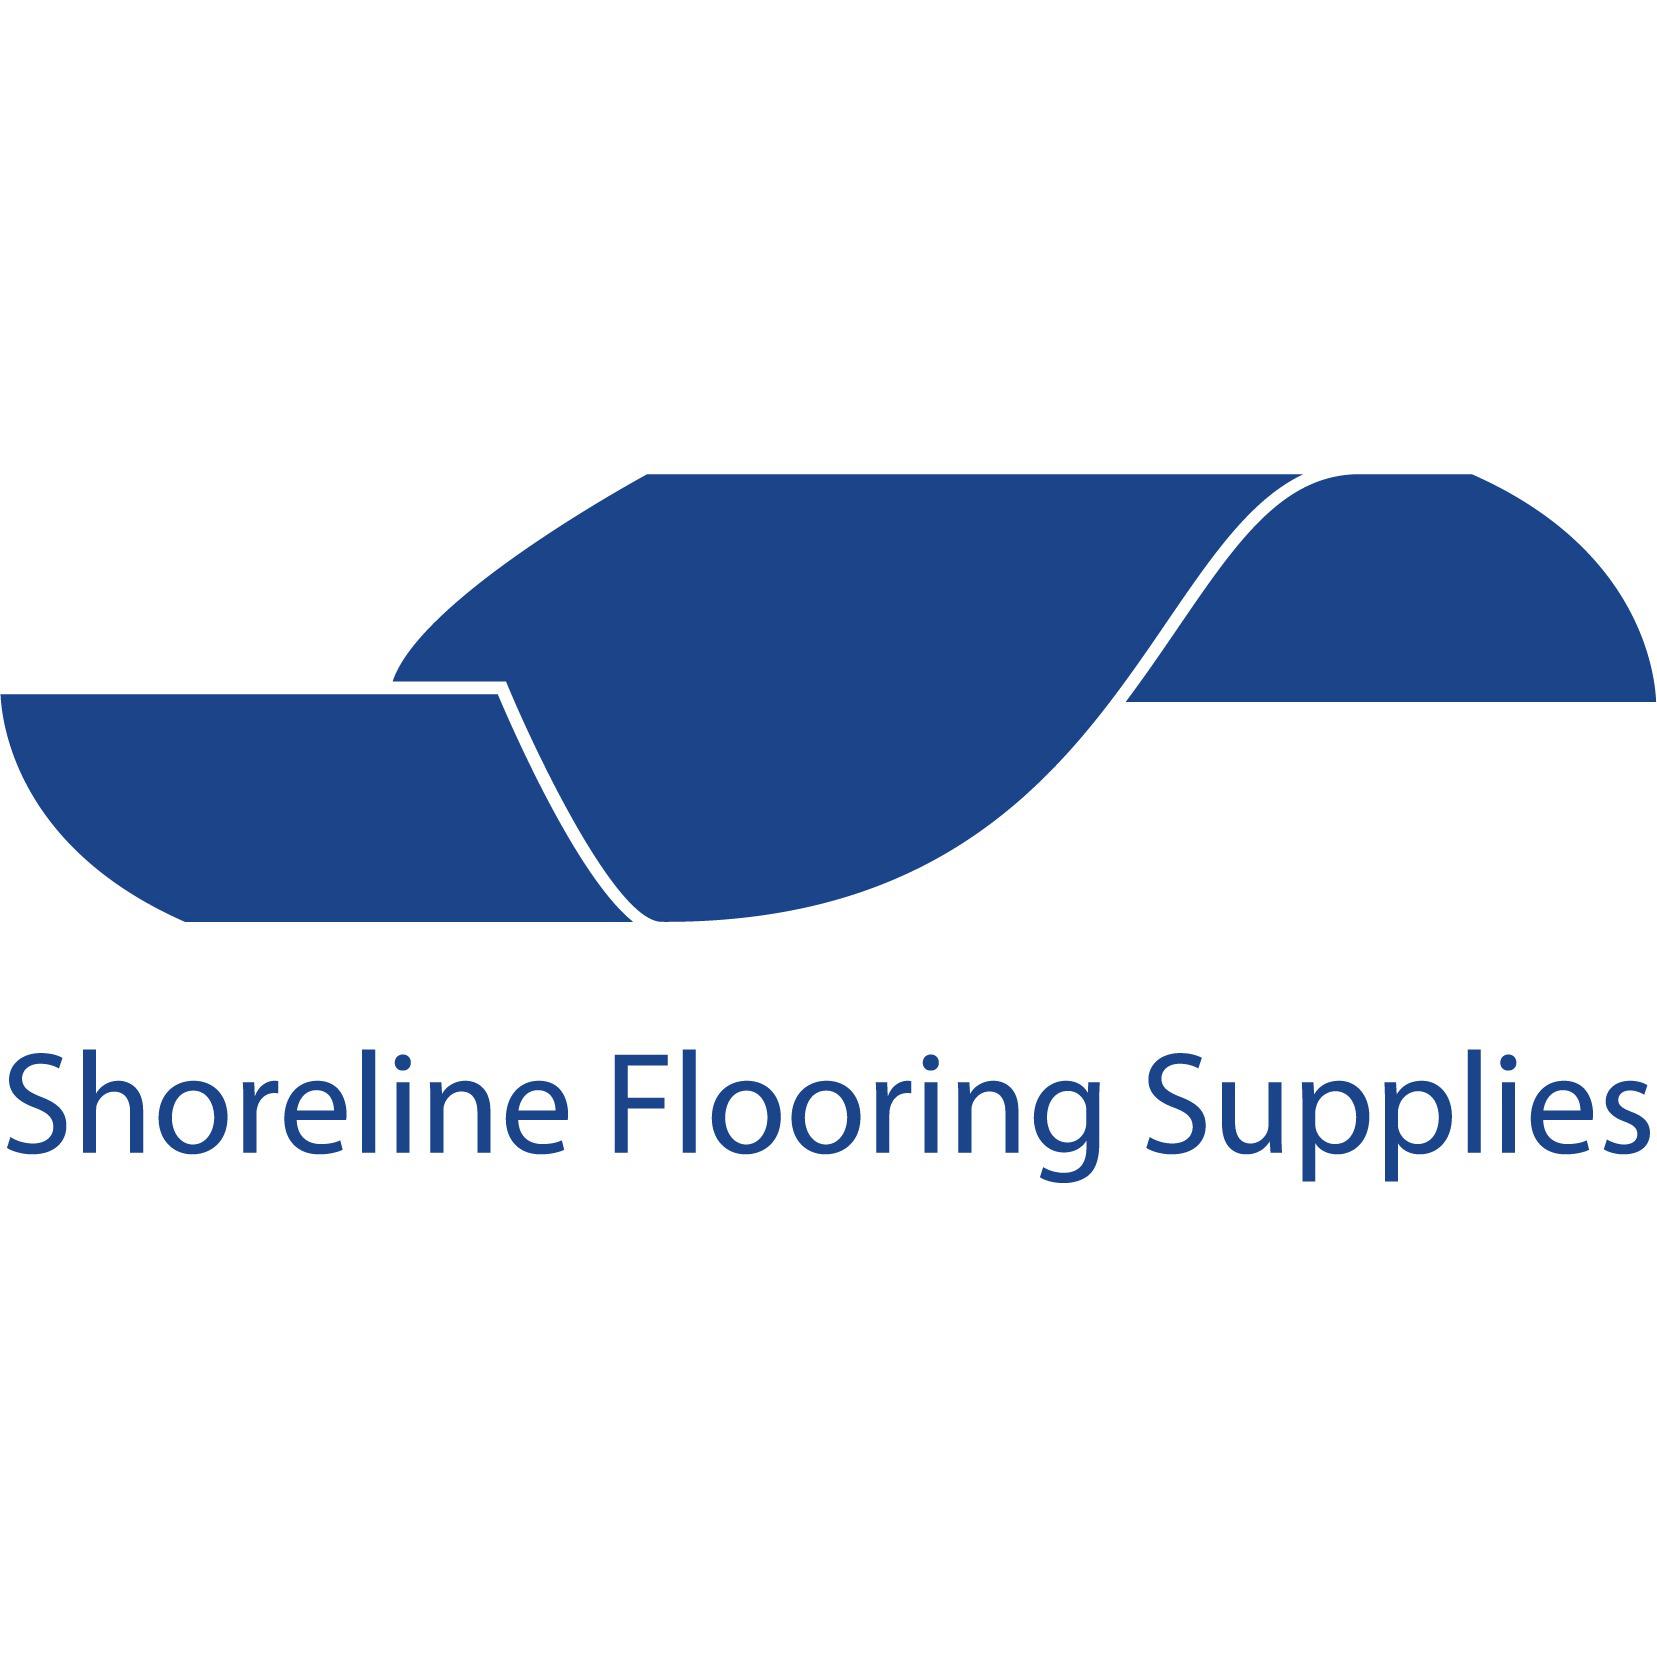 Shoreline Flooring Supplies - Boynton Beach, FL 33426 - (561)330-0221 | ShowMeLocal.com